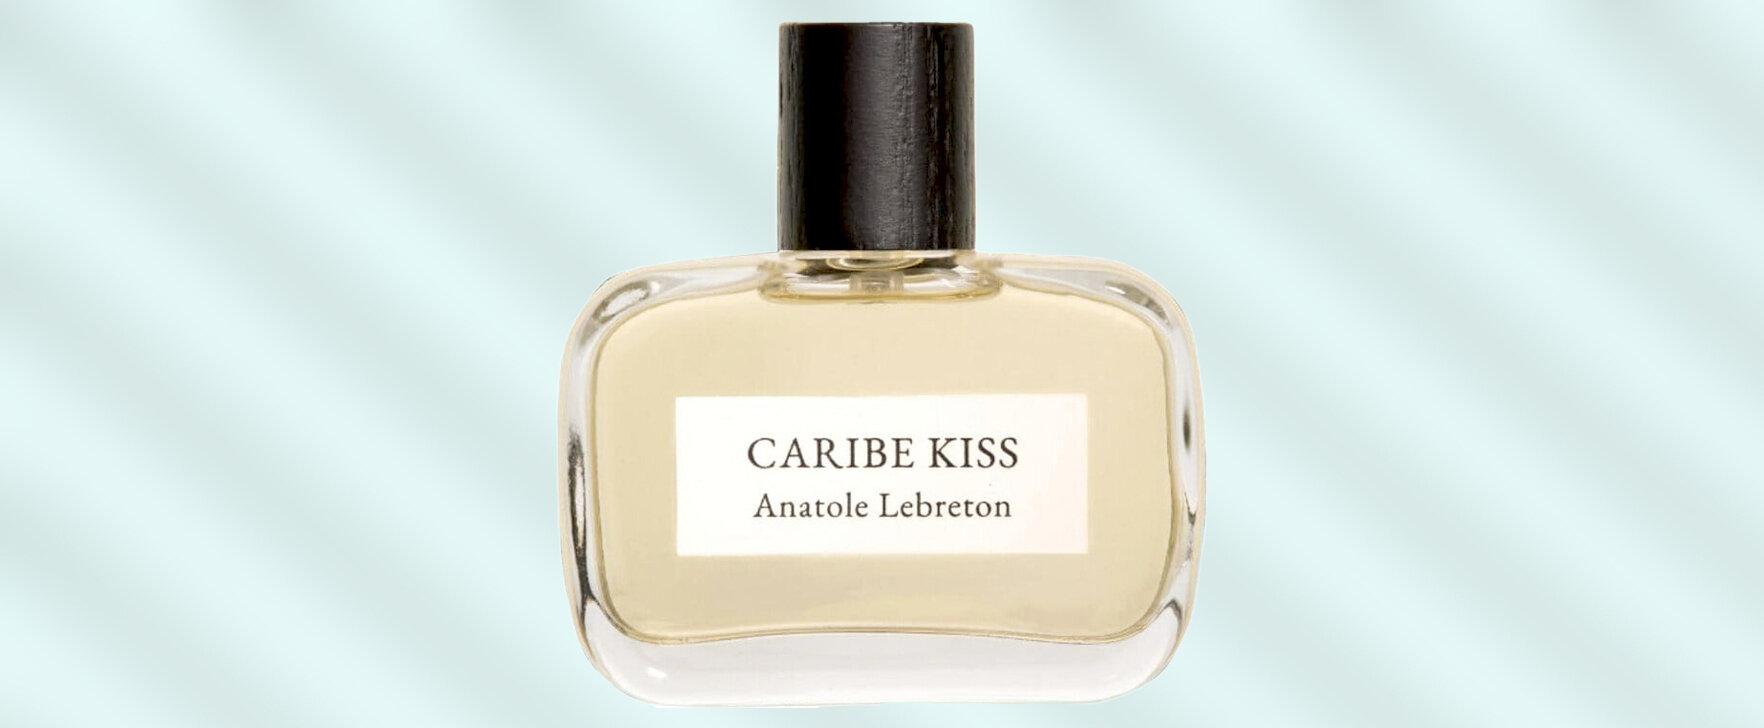 Tropical Fusion: The New Eau de Parfum "Caribe Kiss" by Anatole Lebreton